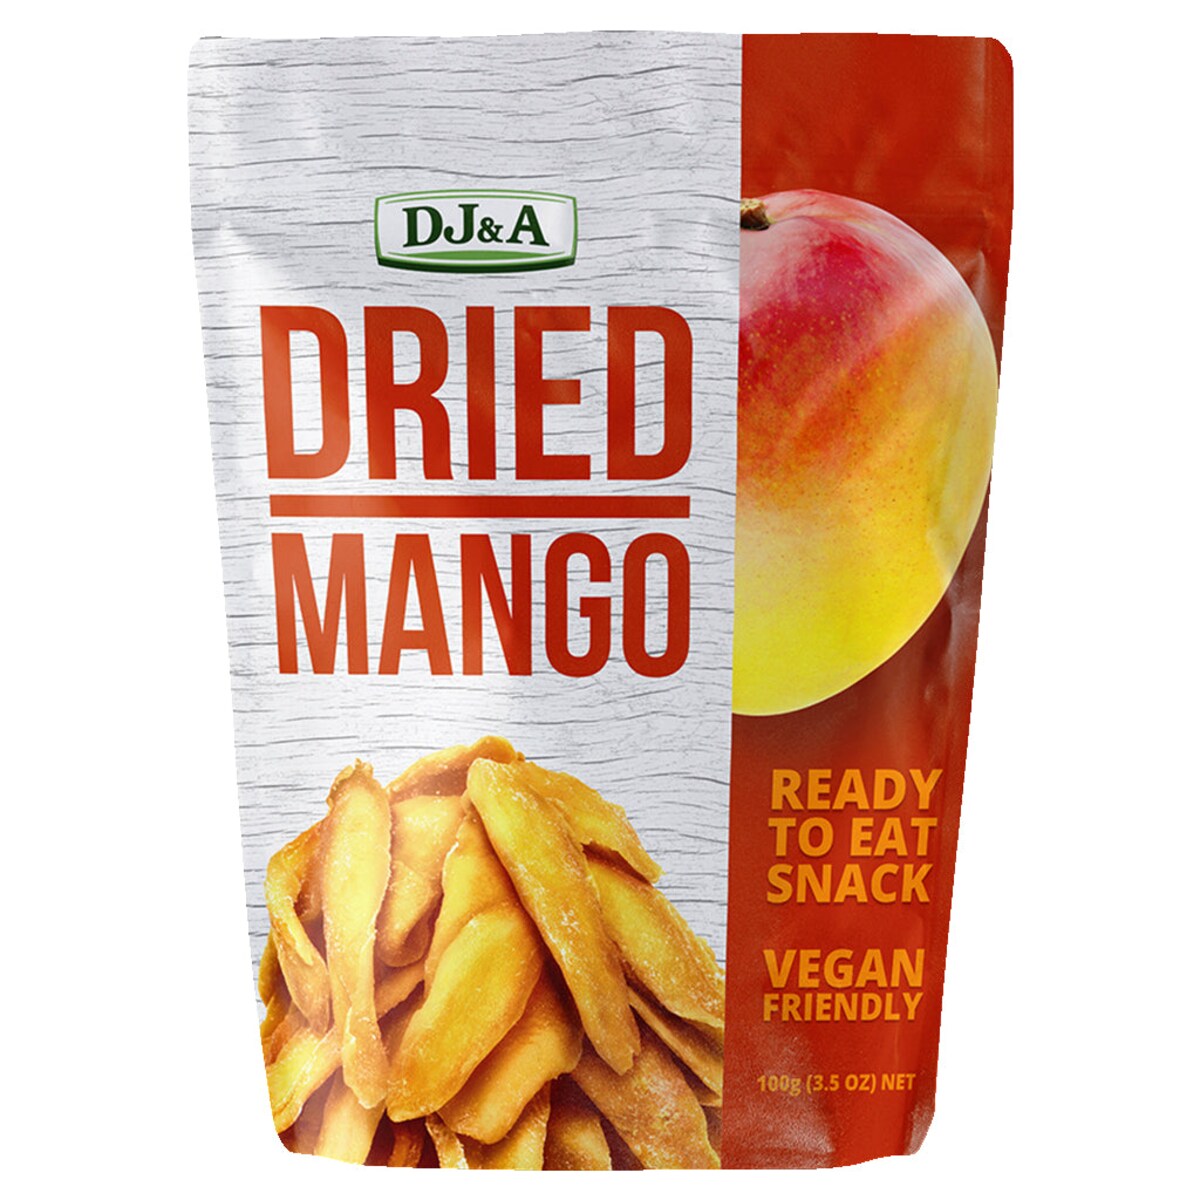 Dj&A Dried Mango 100g